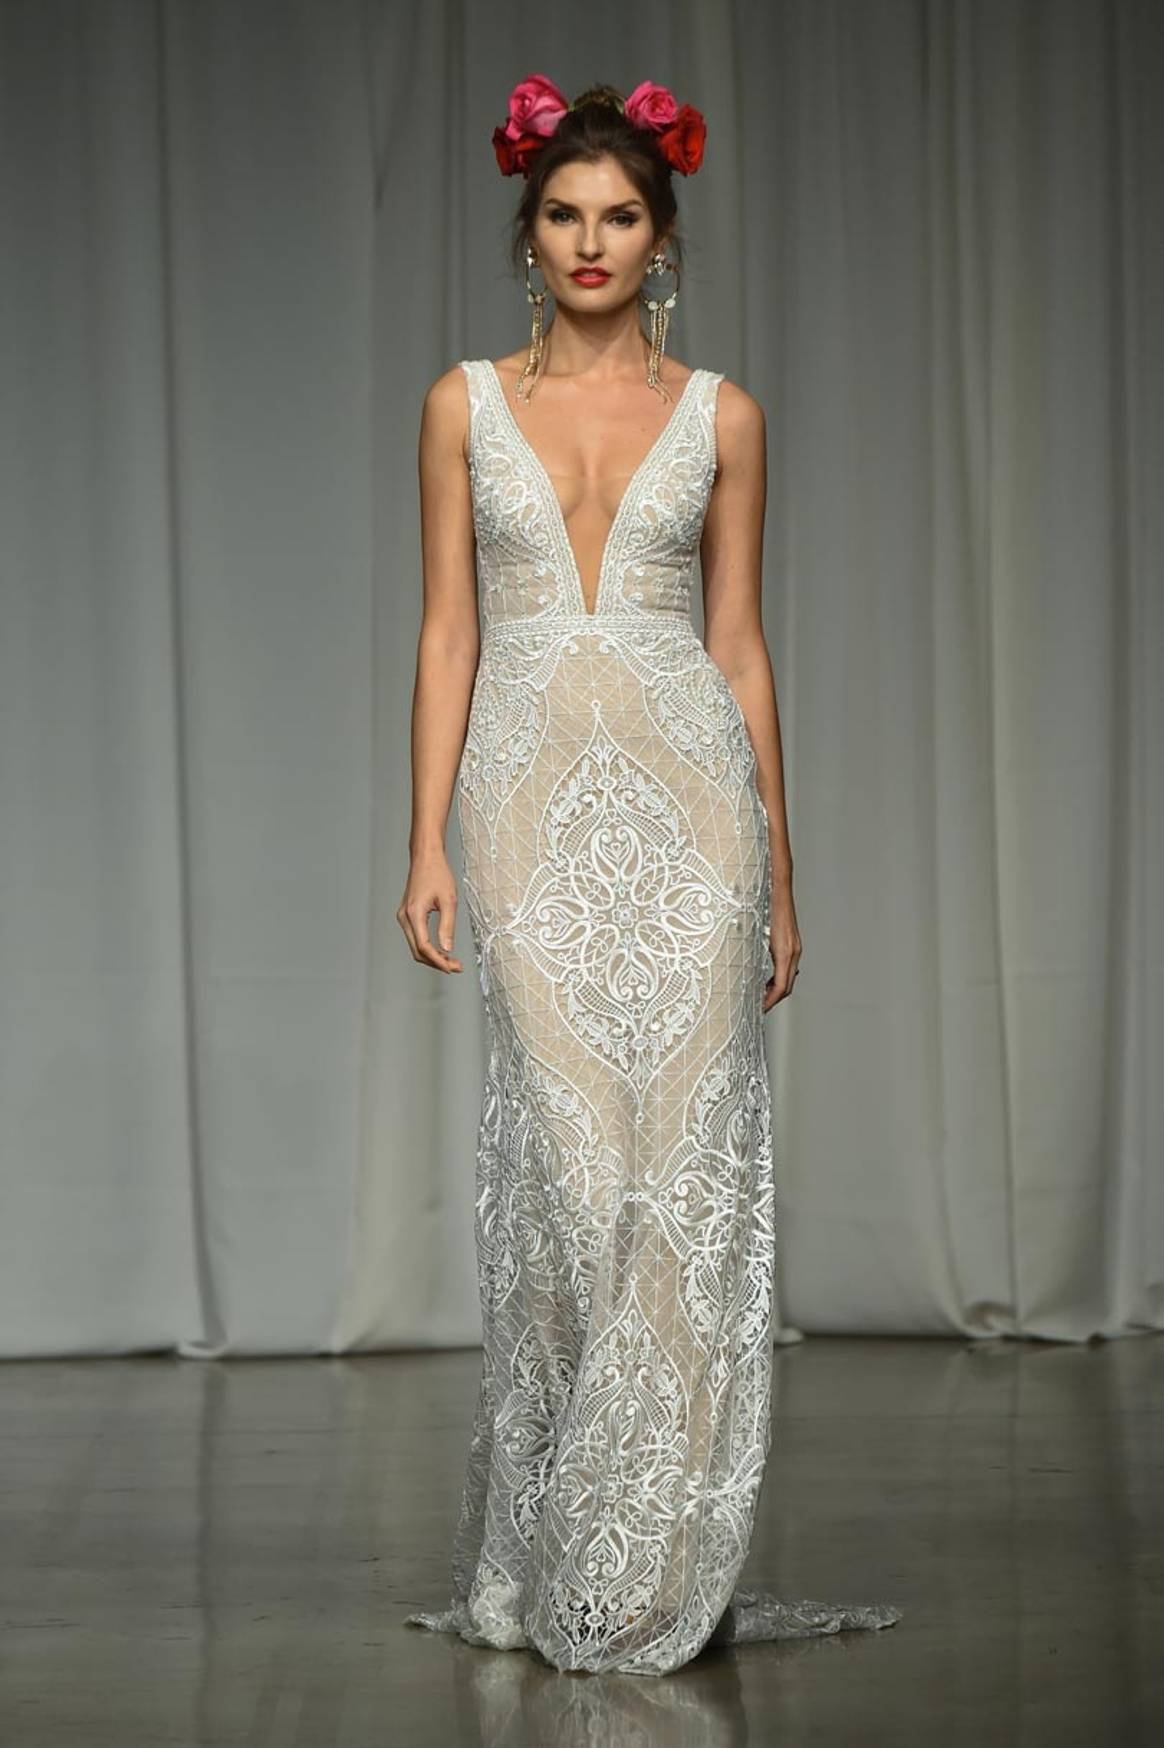 Julie Vino New York Bridal Fashion Week Show presents old world elegance